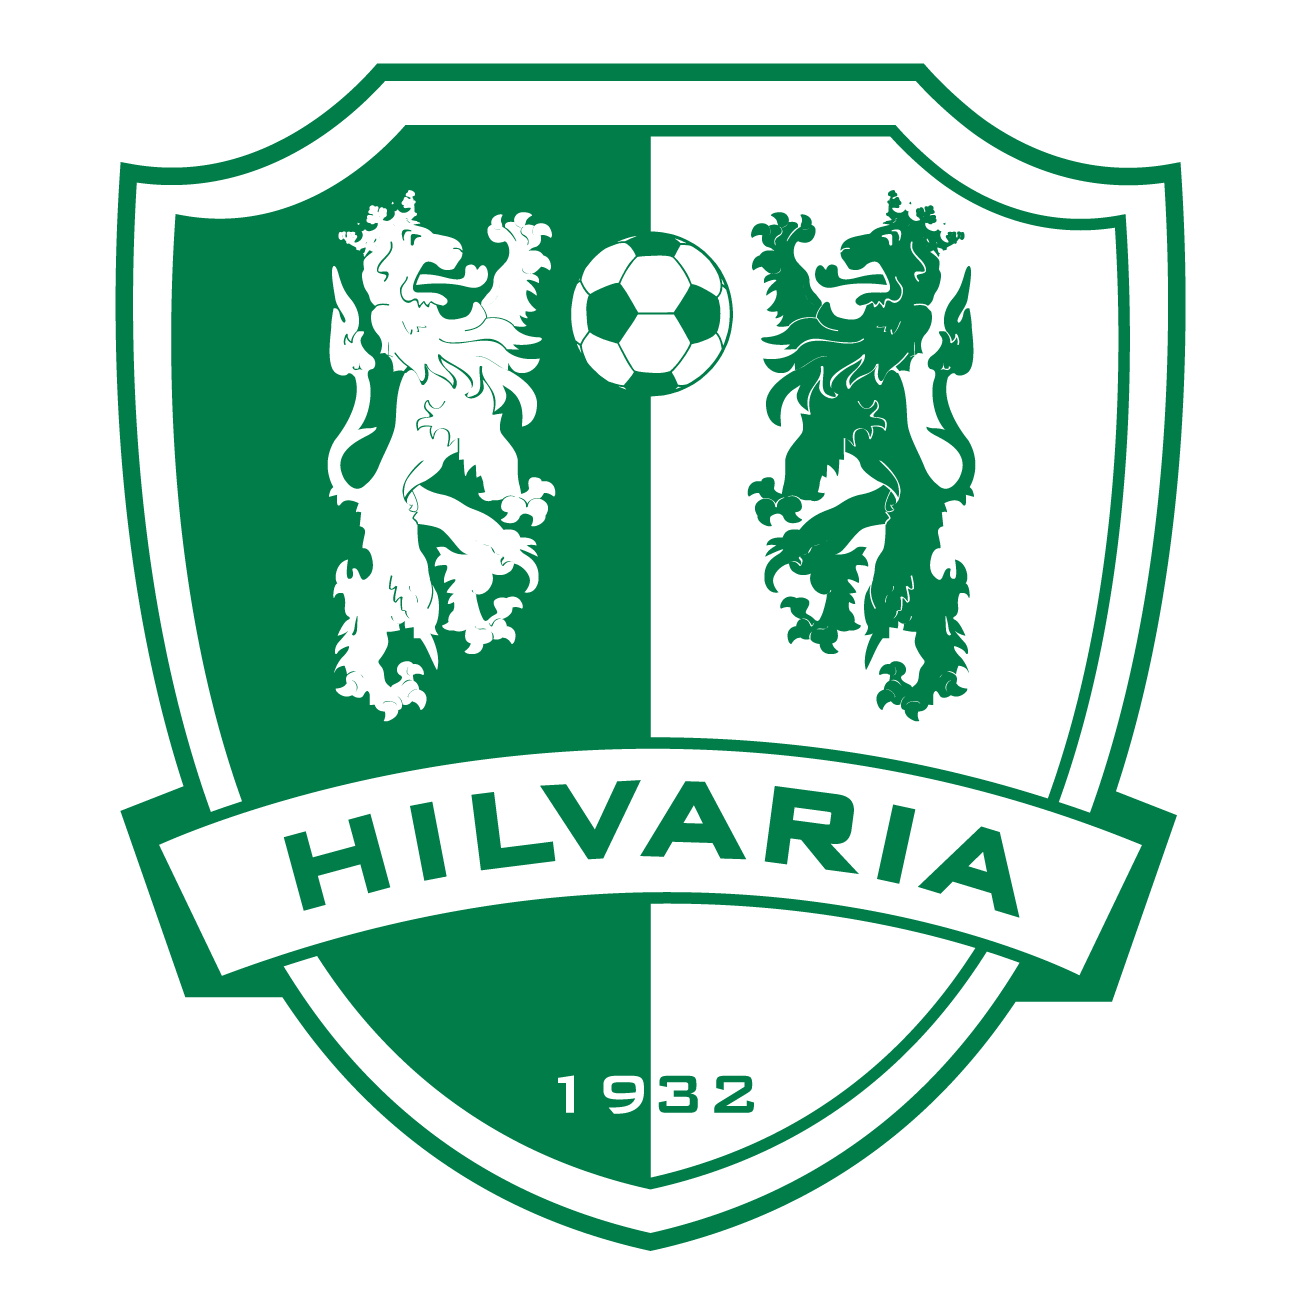 Hilvaria